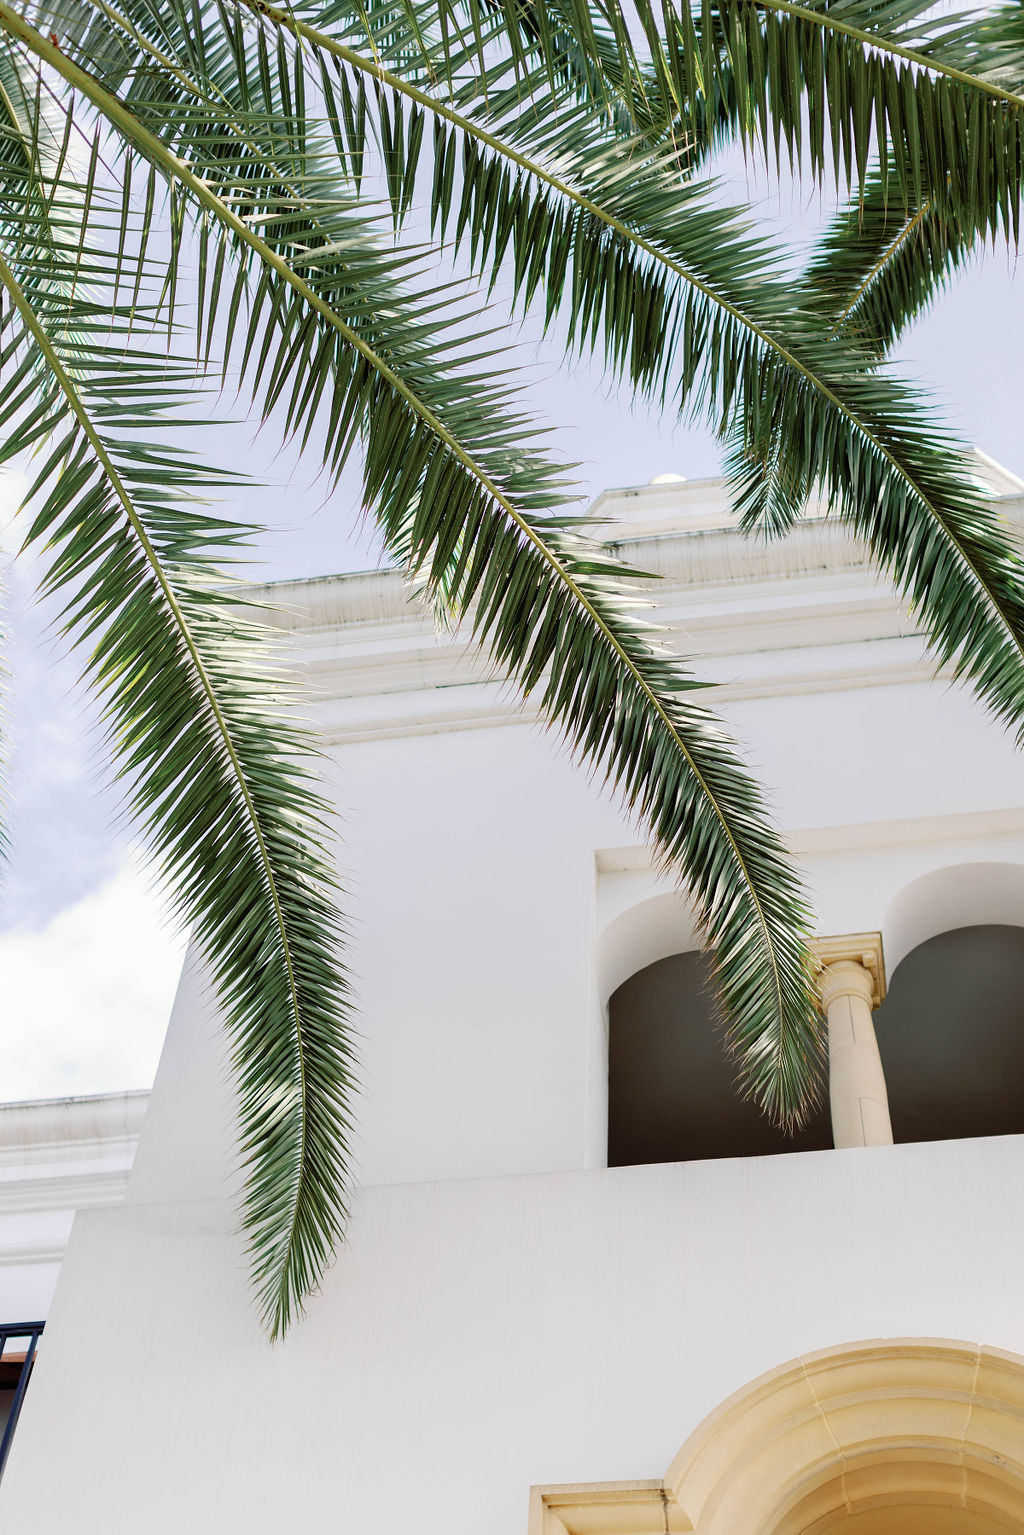 Palm fronds and a Spanish Colonial building at a Mission Santa Barbara wedding | Photo by Sarah Block of Sarah Block Photography